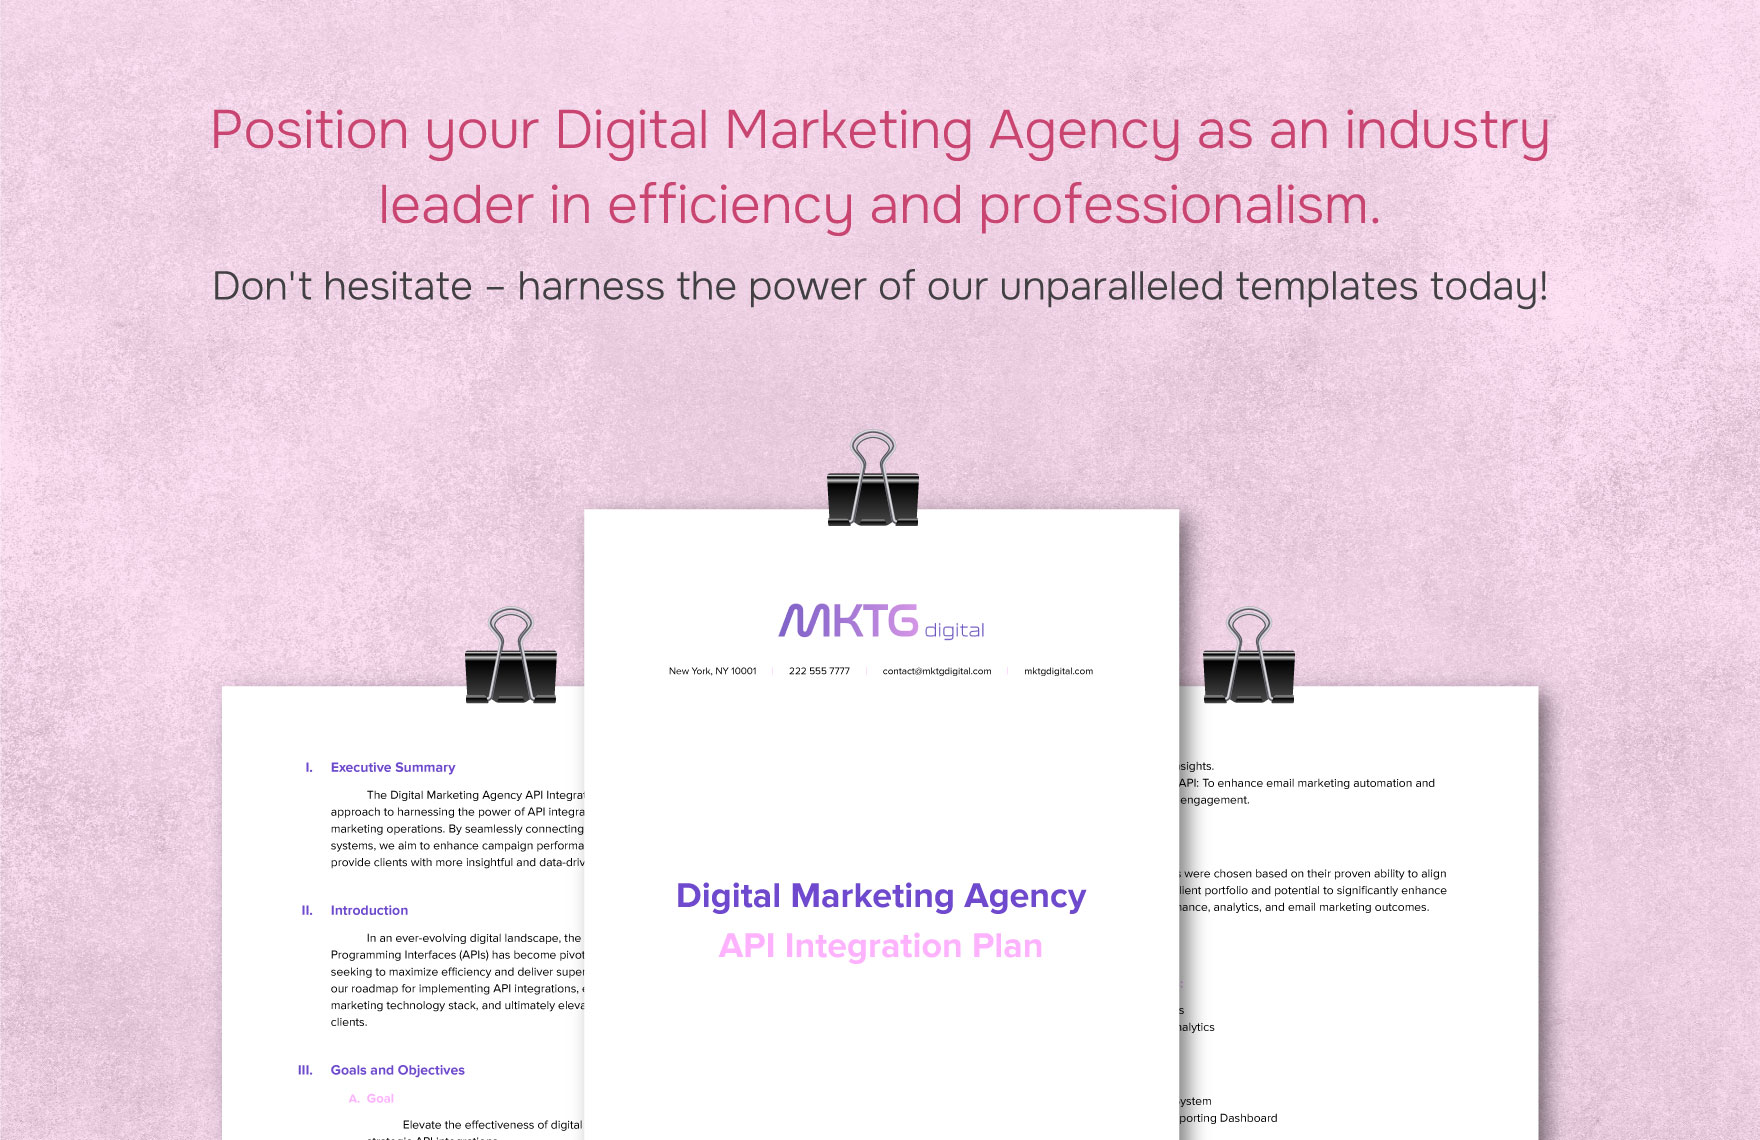 Digital Marketing Agency API Integration Plan Template